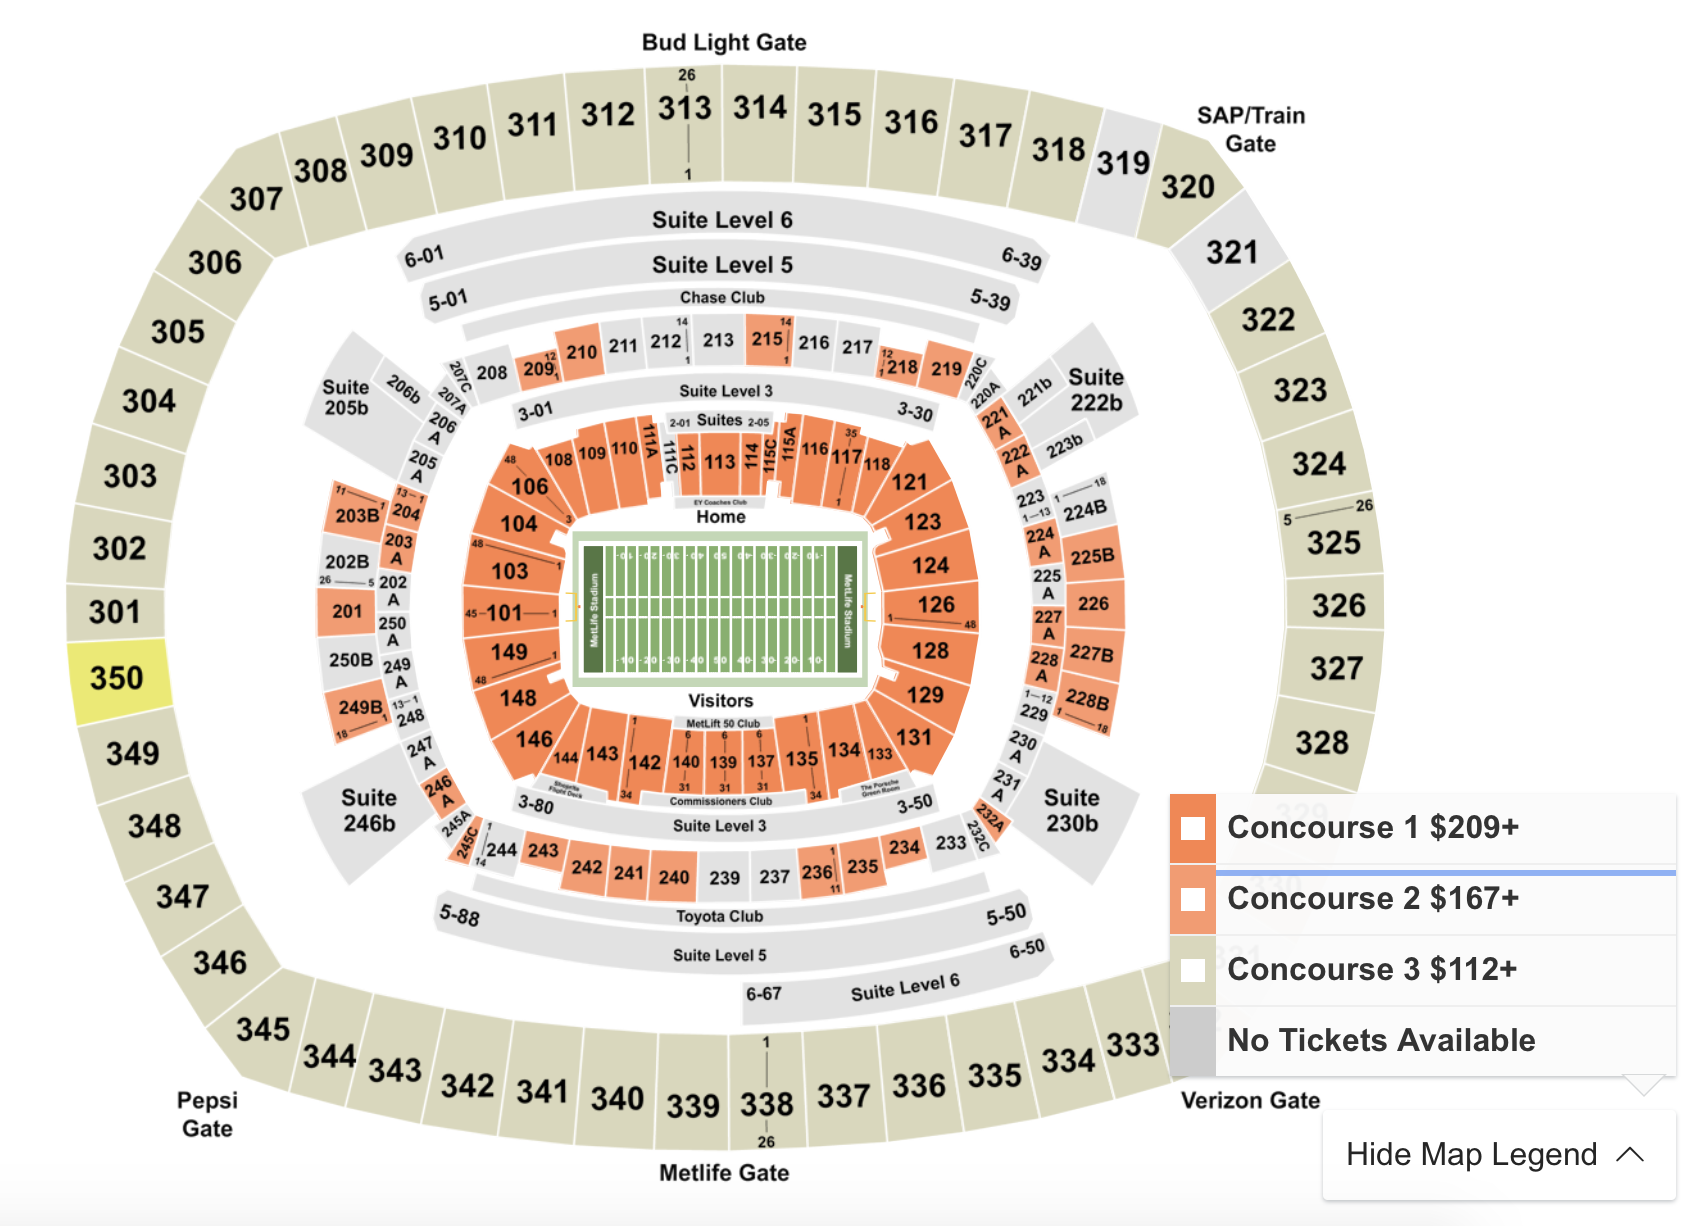 Giants Stadium Virtual Seating Chart